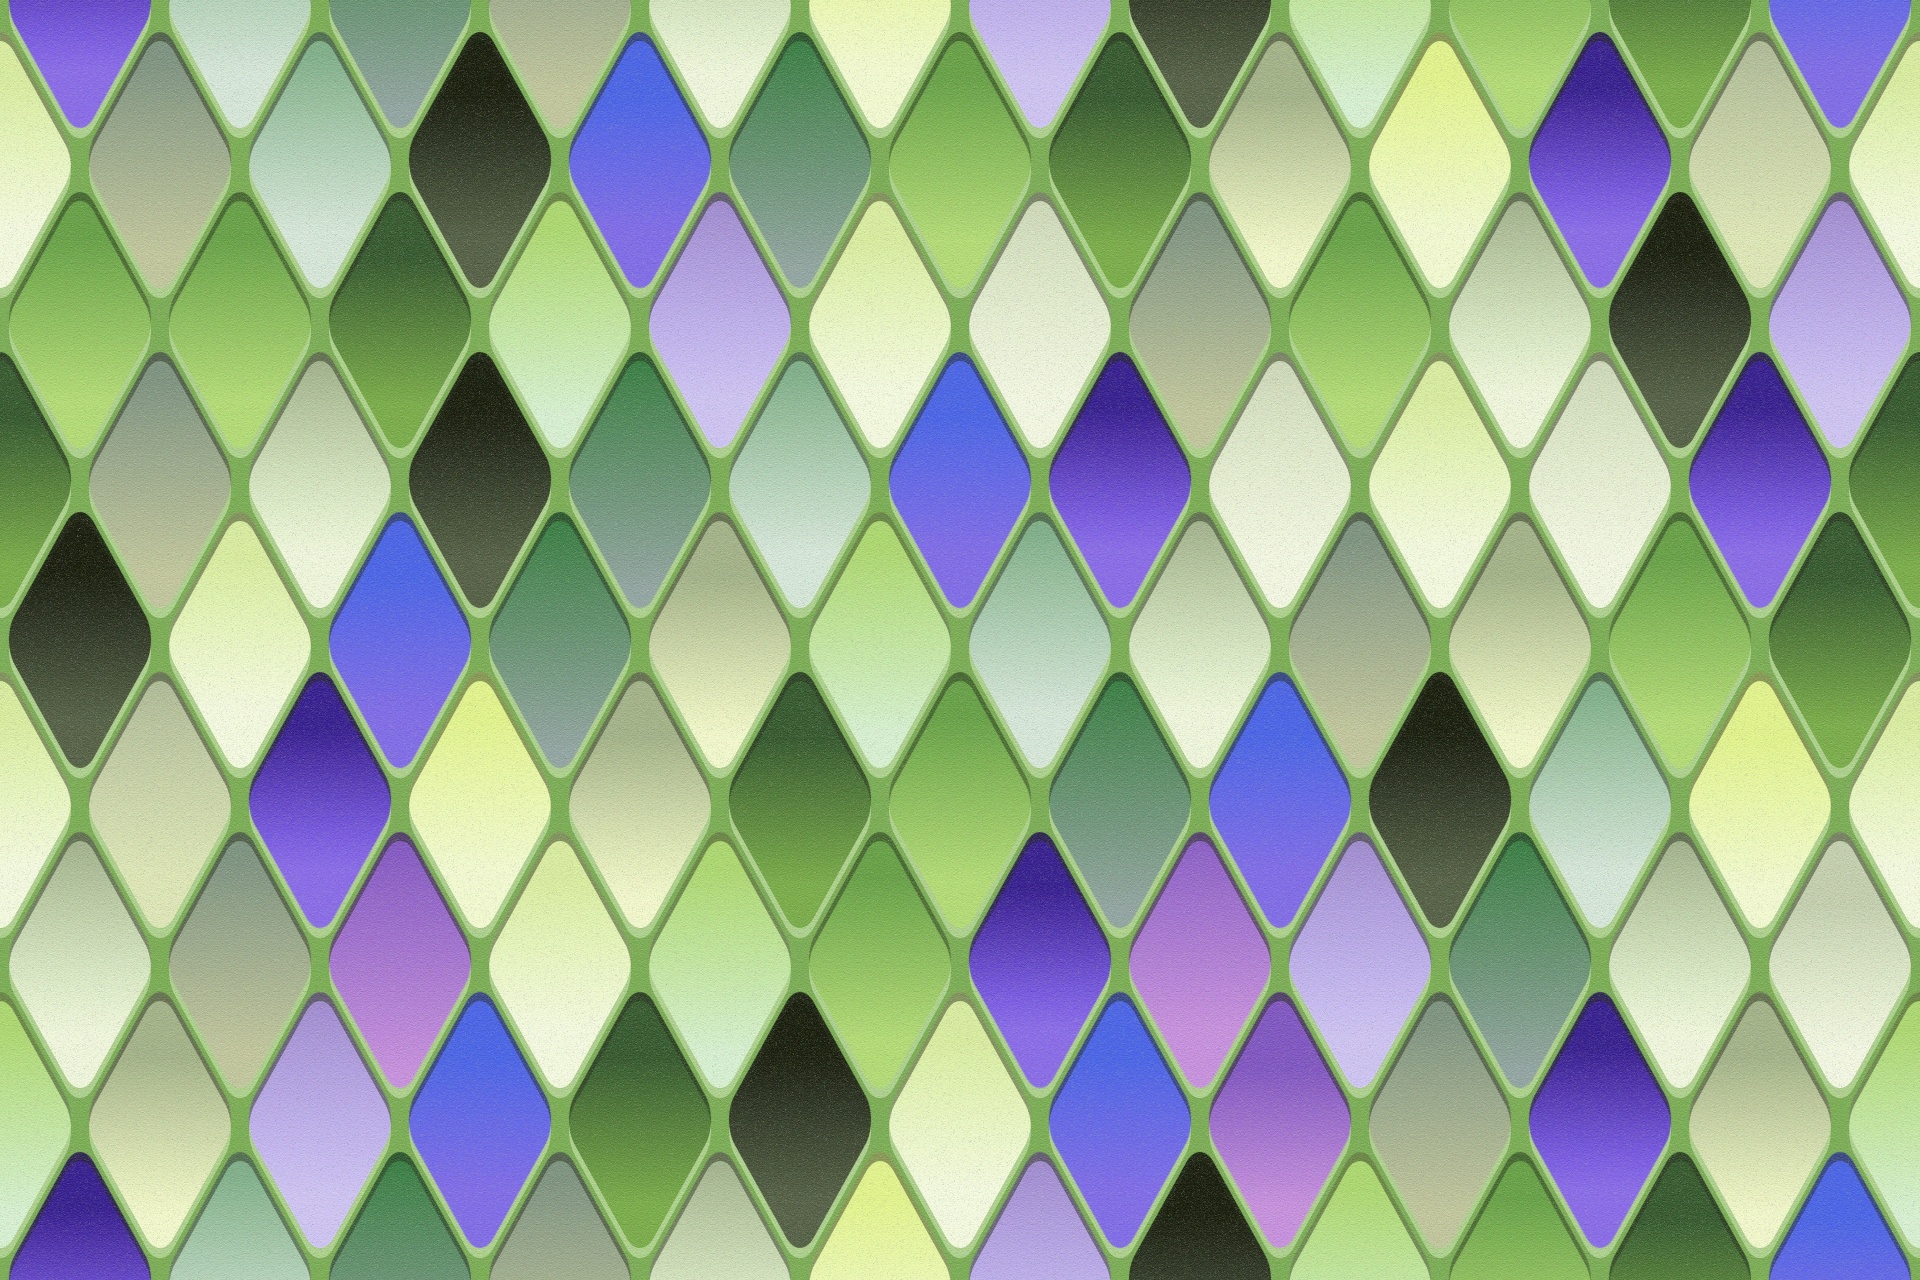 Checkered Pattern Mosaic Background